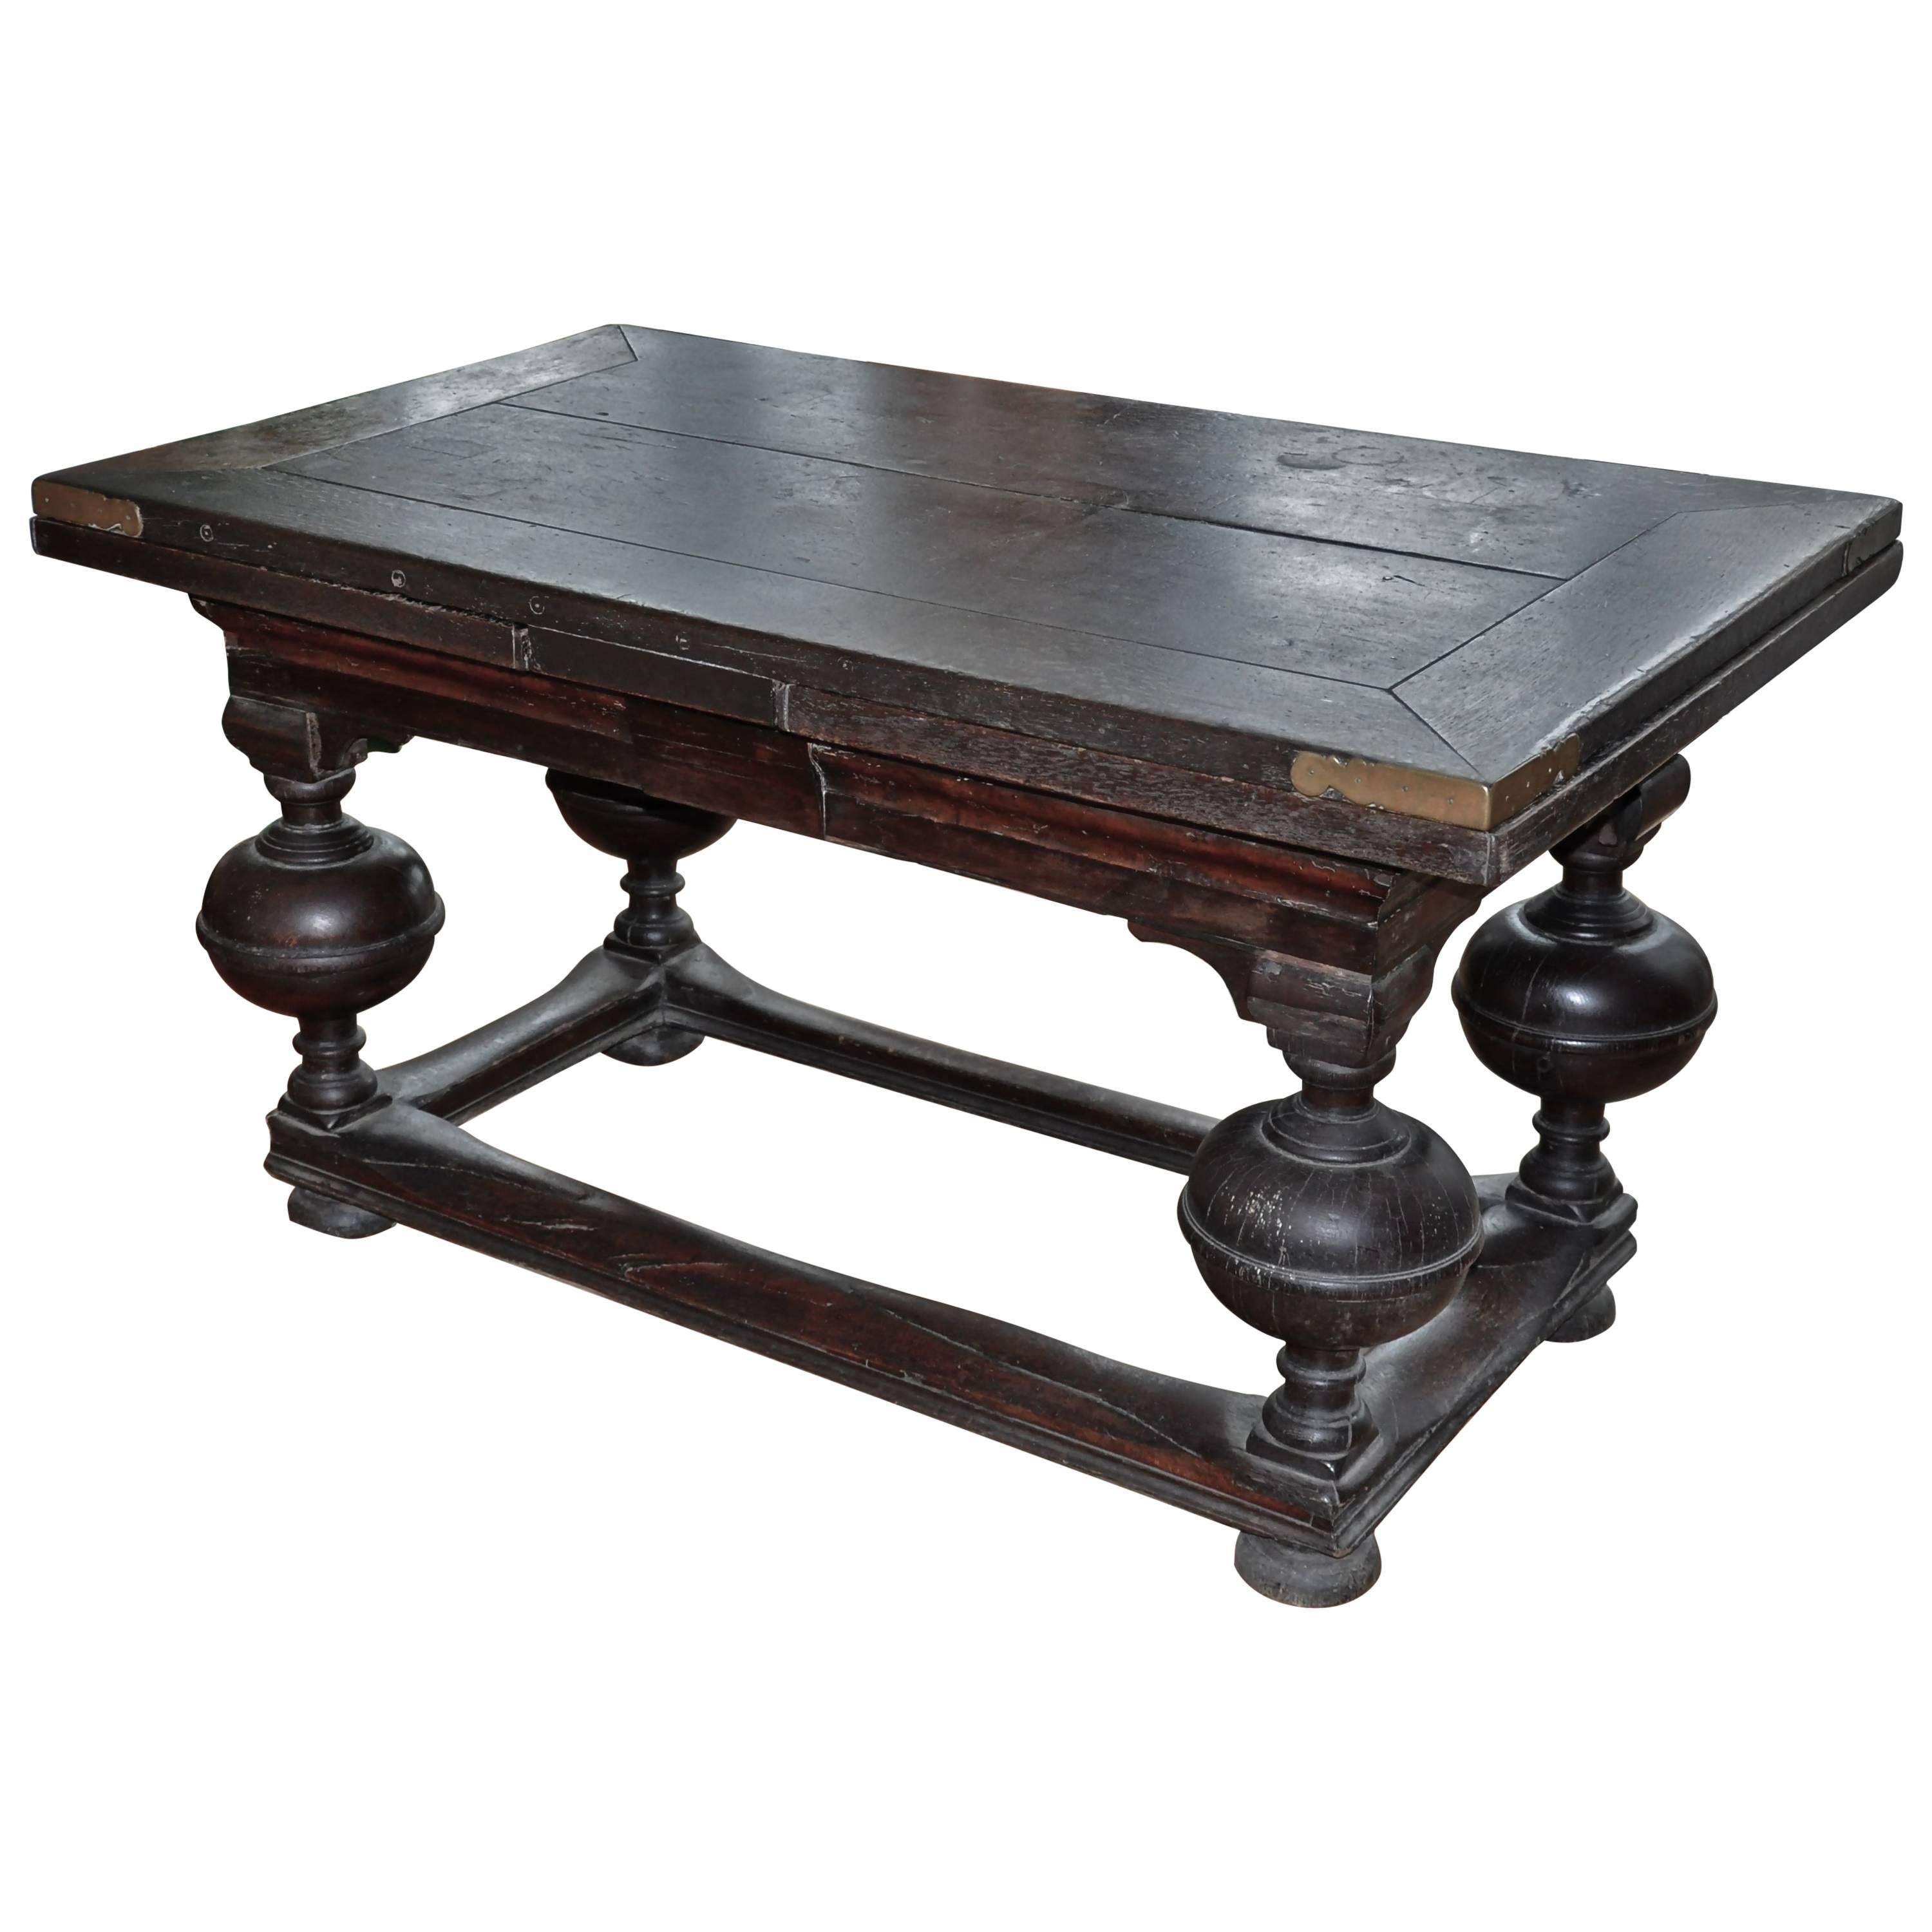 Period 17th Century Dutch Oak Withdraw Table